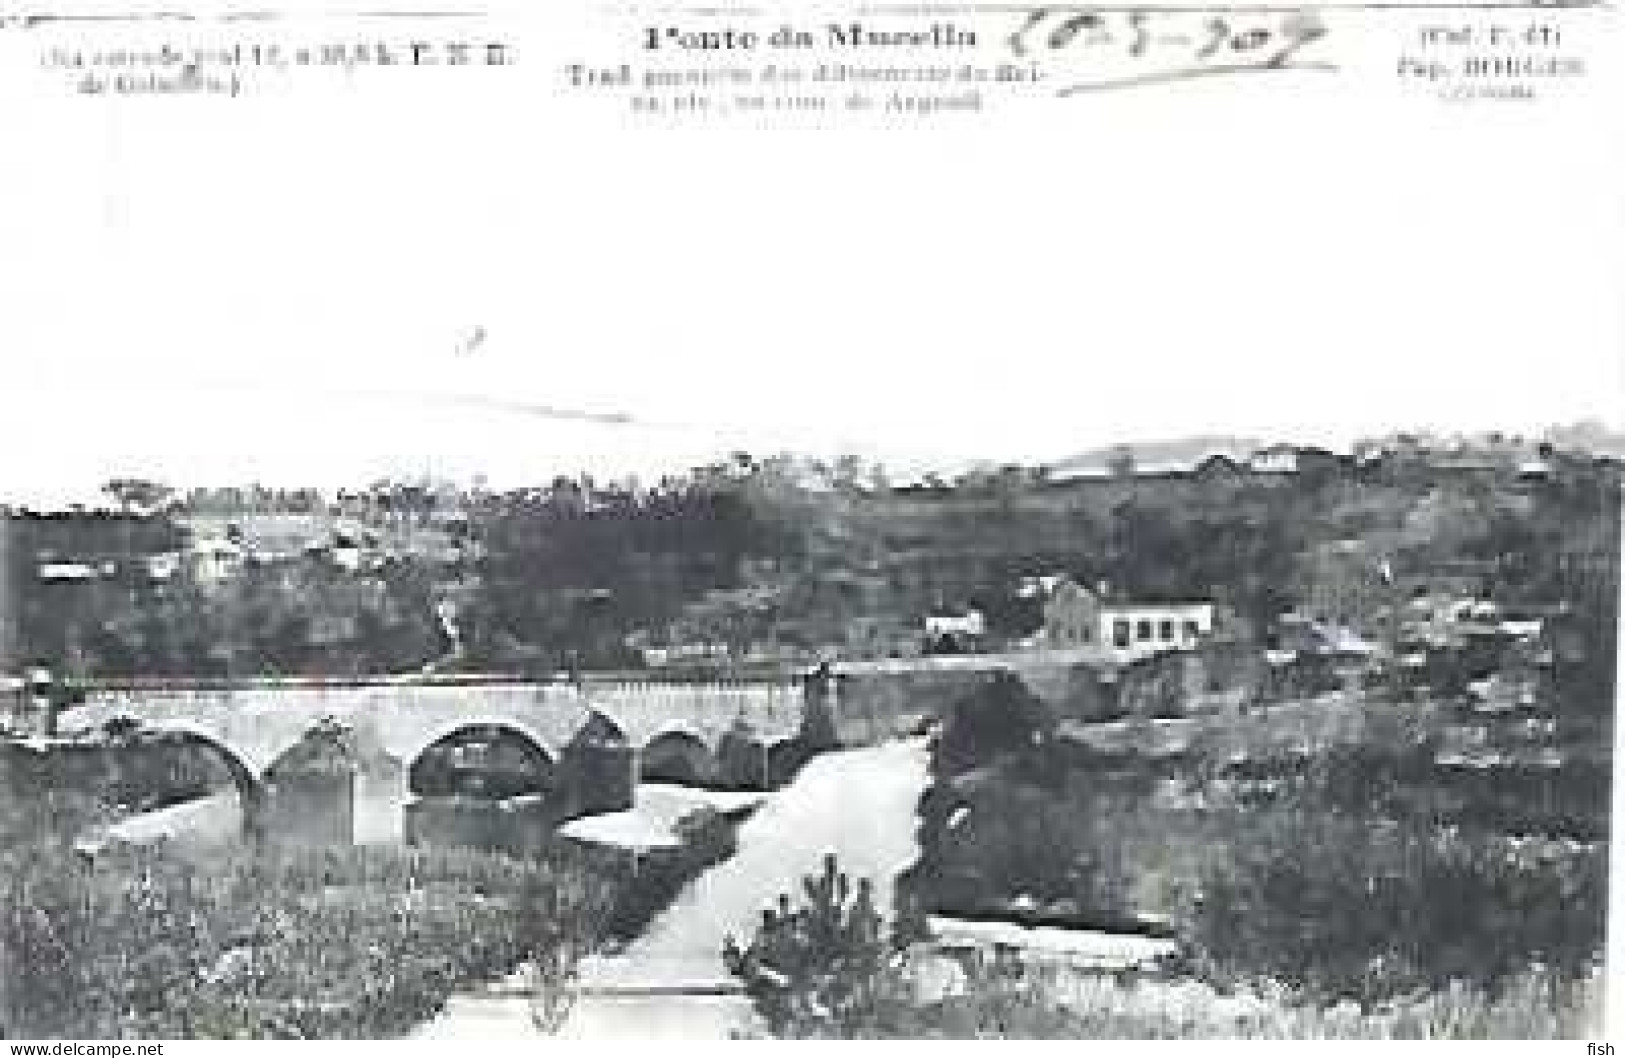 Portugal & Marcofilia, Arganil, Mucella Bridge, Estrada Real 12 A 38.8Km De Coimbra, Poiares A Manteigas 1909 (13 - Ponti